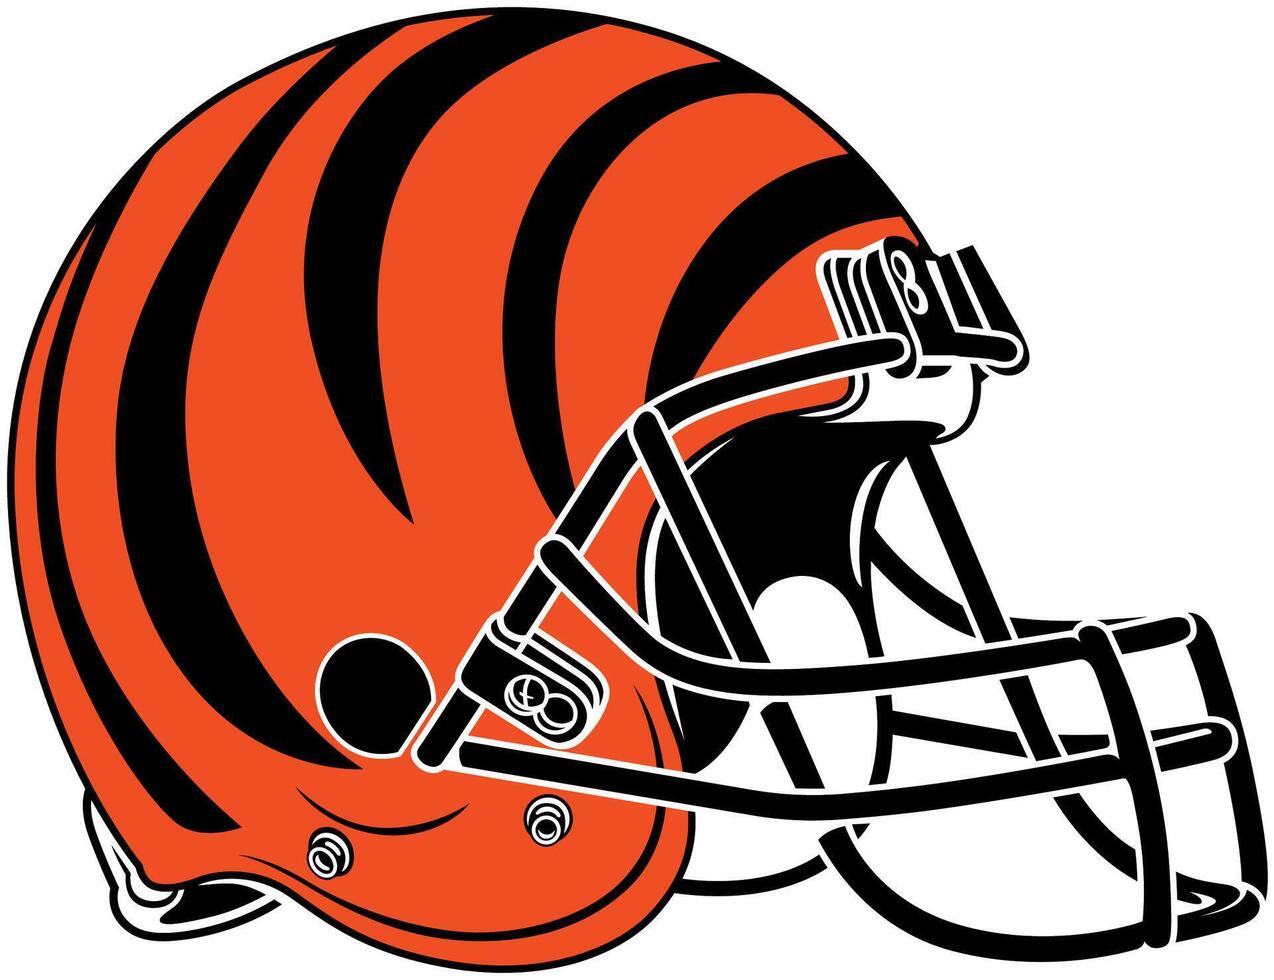 a laranja capacete do a Cincinnati bengalas americano futebol equipe vetor